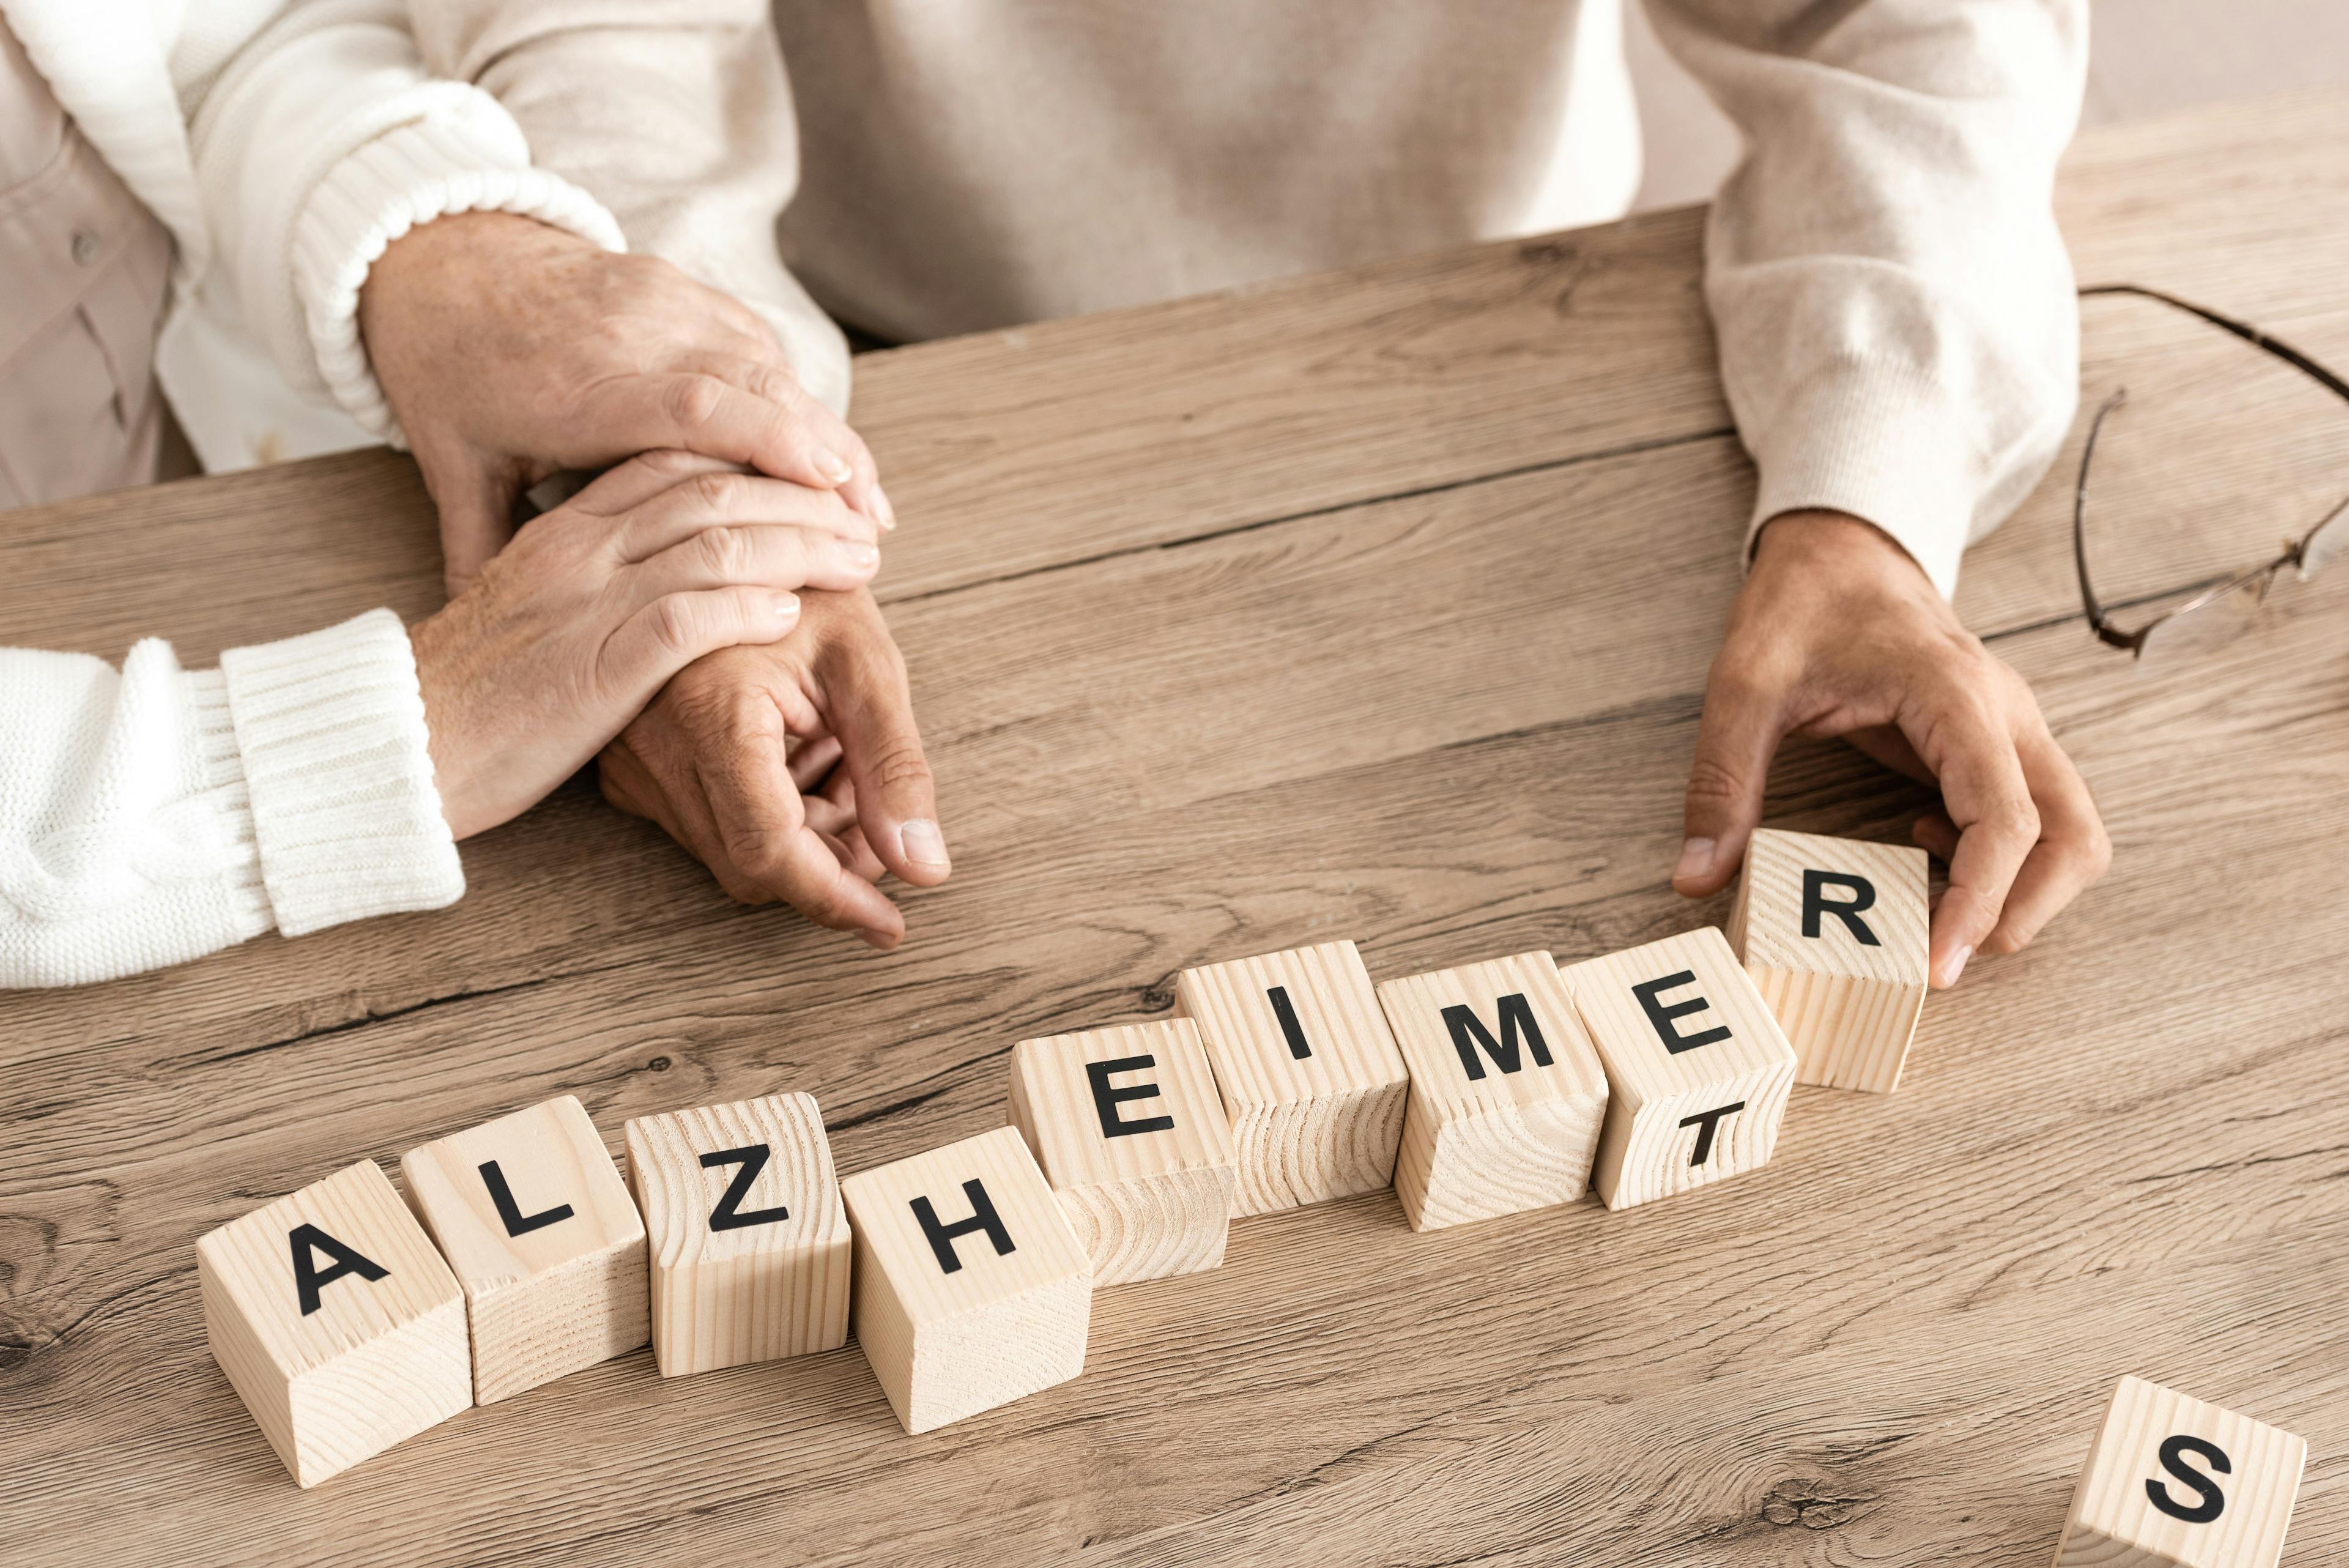 'Alzheimer' spelled in wooden blocks / LIGHTFIELD STUDIOS - stock.adobe.com